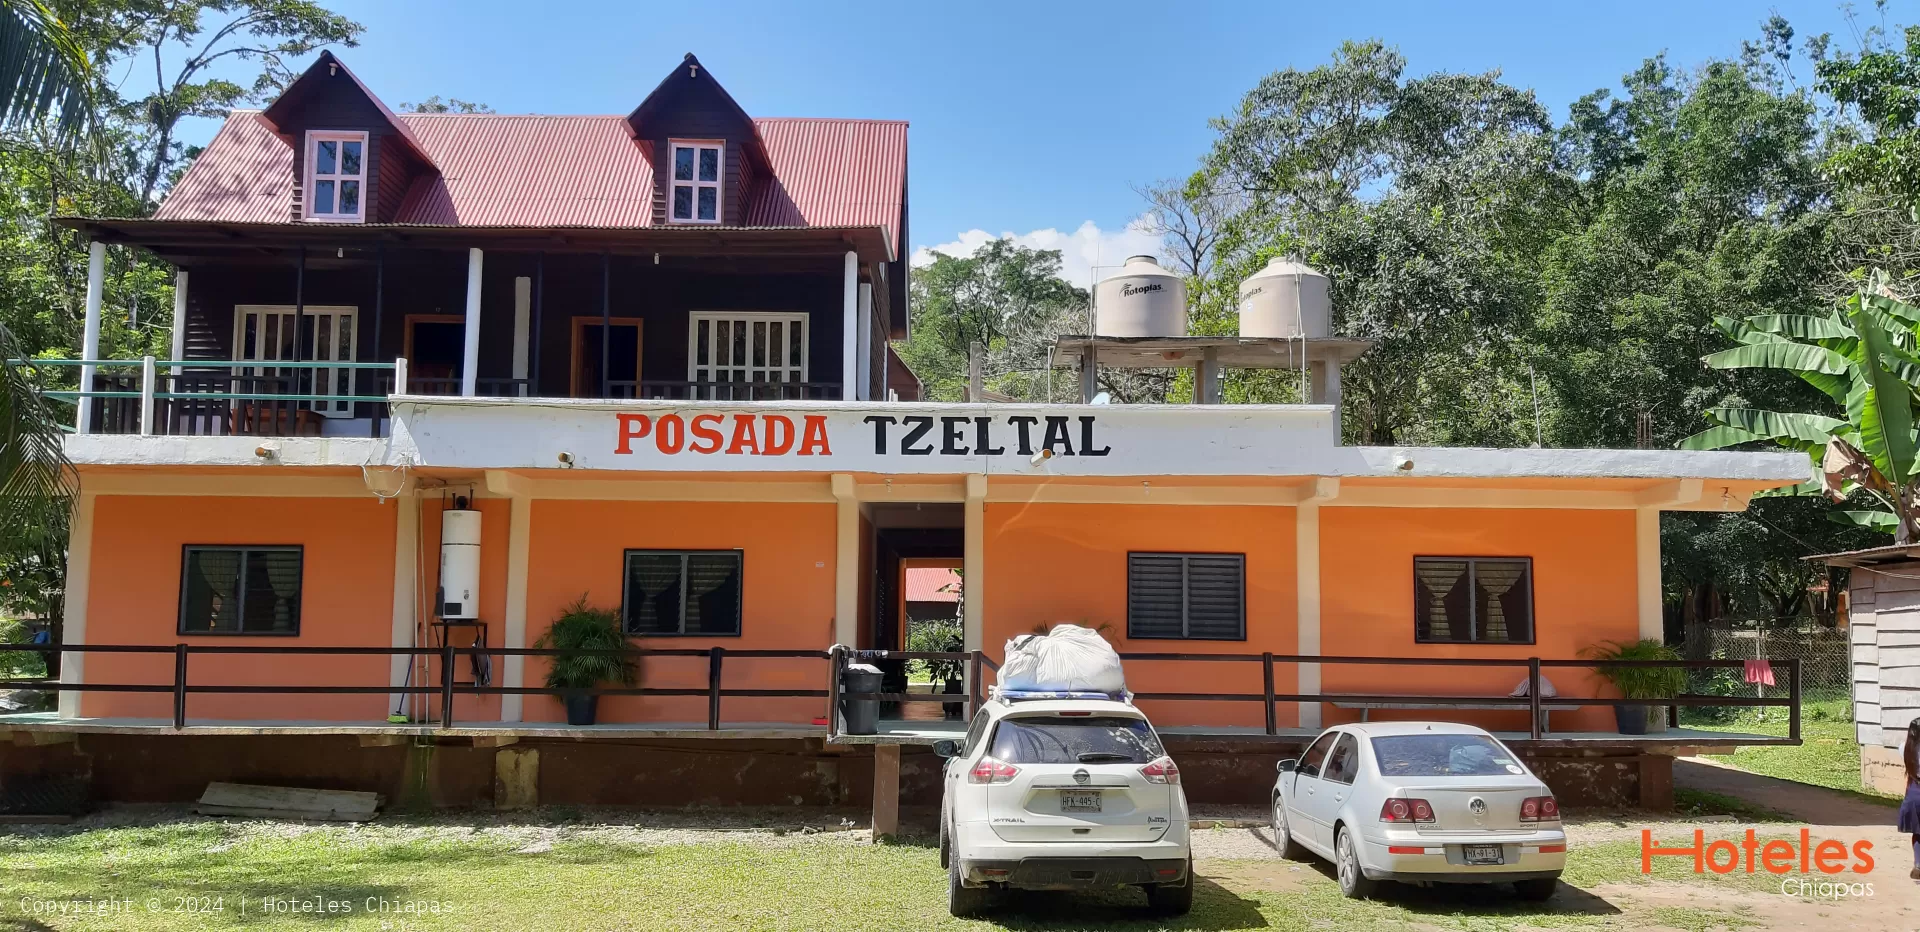 Posada Tzeltal - Hoteles Chiapas